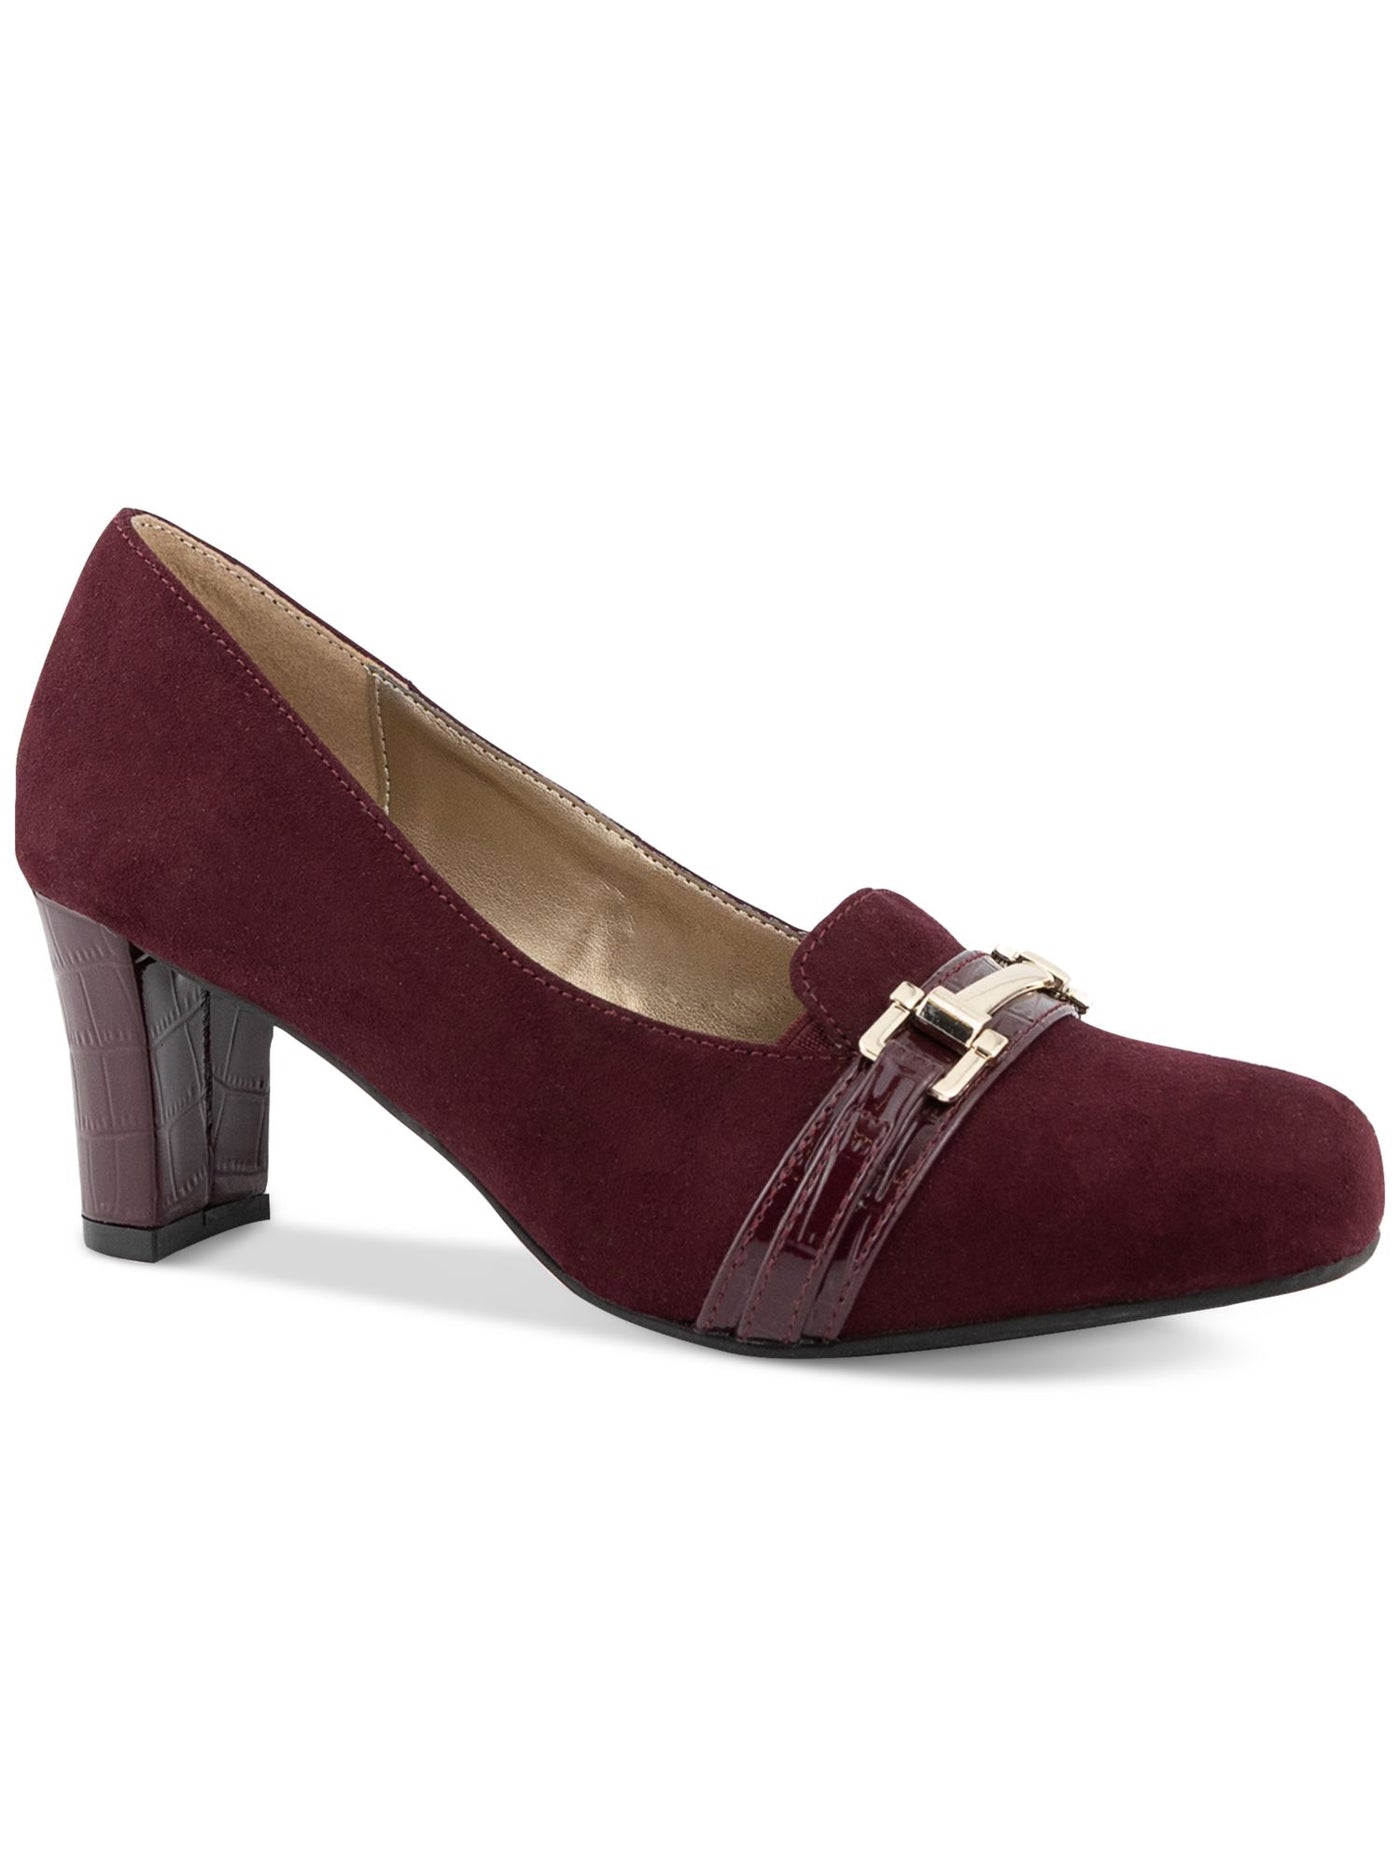 KAREN SCOTT Womens Burgundy Cushioned Penzey Almond Toe Block Heel Slip On Dress Pumps Shoes 10 M